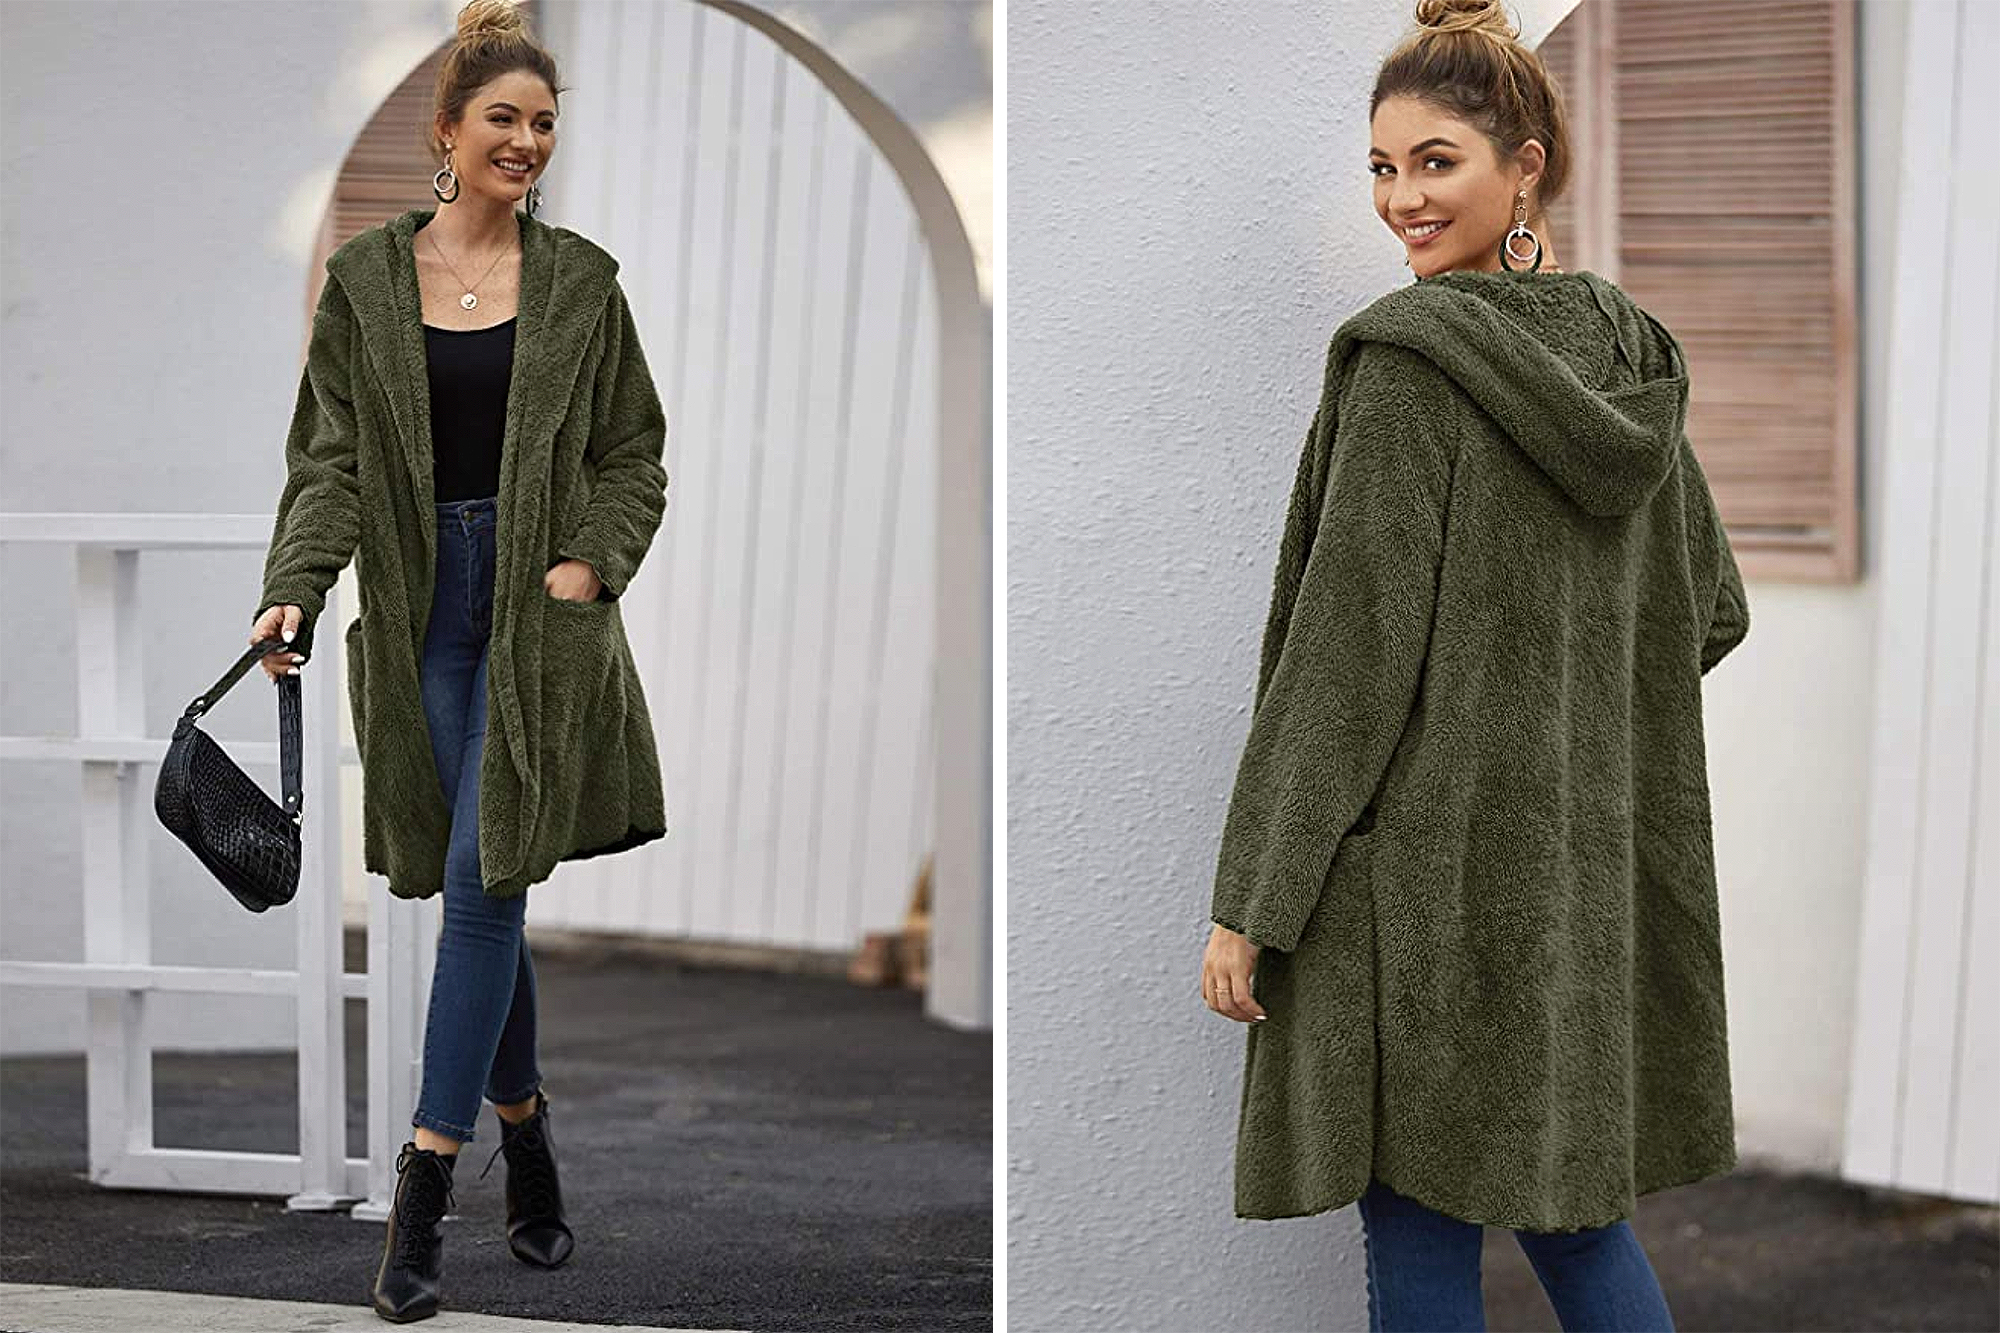 Romanstii Ladies Jacket Womens Fleece Faux Fur Coats Casual Outerwear Tops Open Front Cardigan Jacket Sweater with Pockets